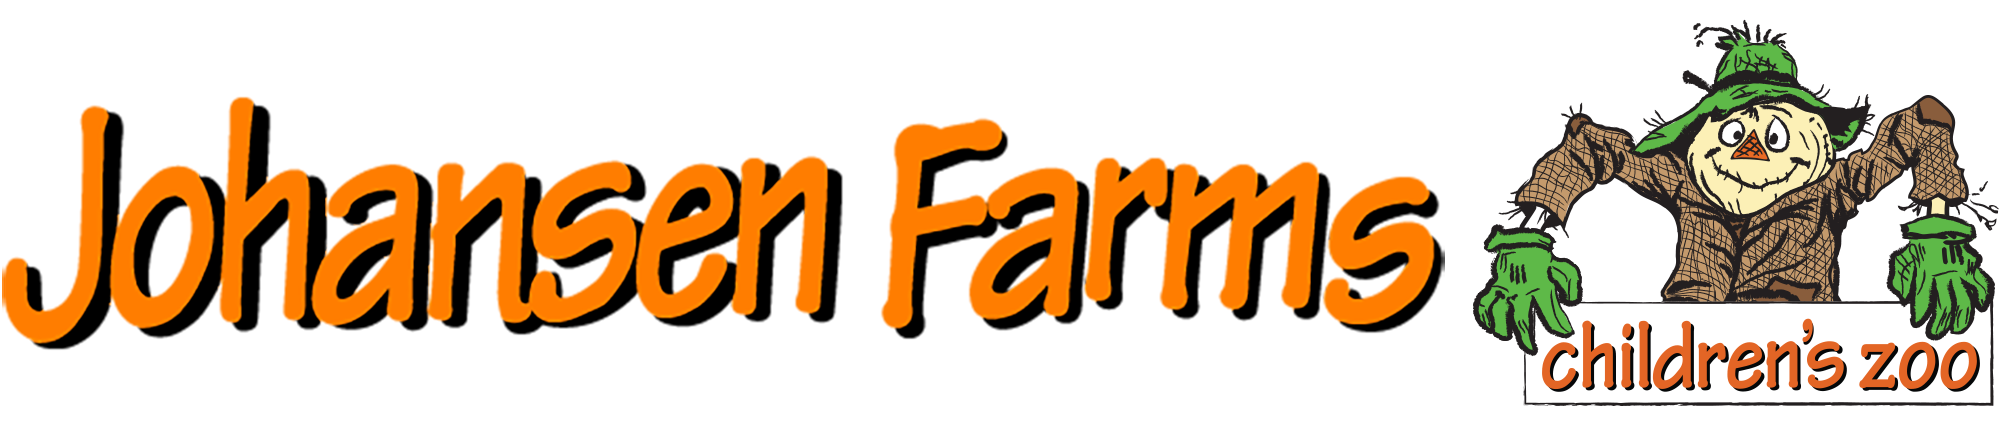 Johansen Farms Children's Zoo, Pumpkin Patch & Fall Festival - Bolingbrook, Illinois